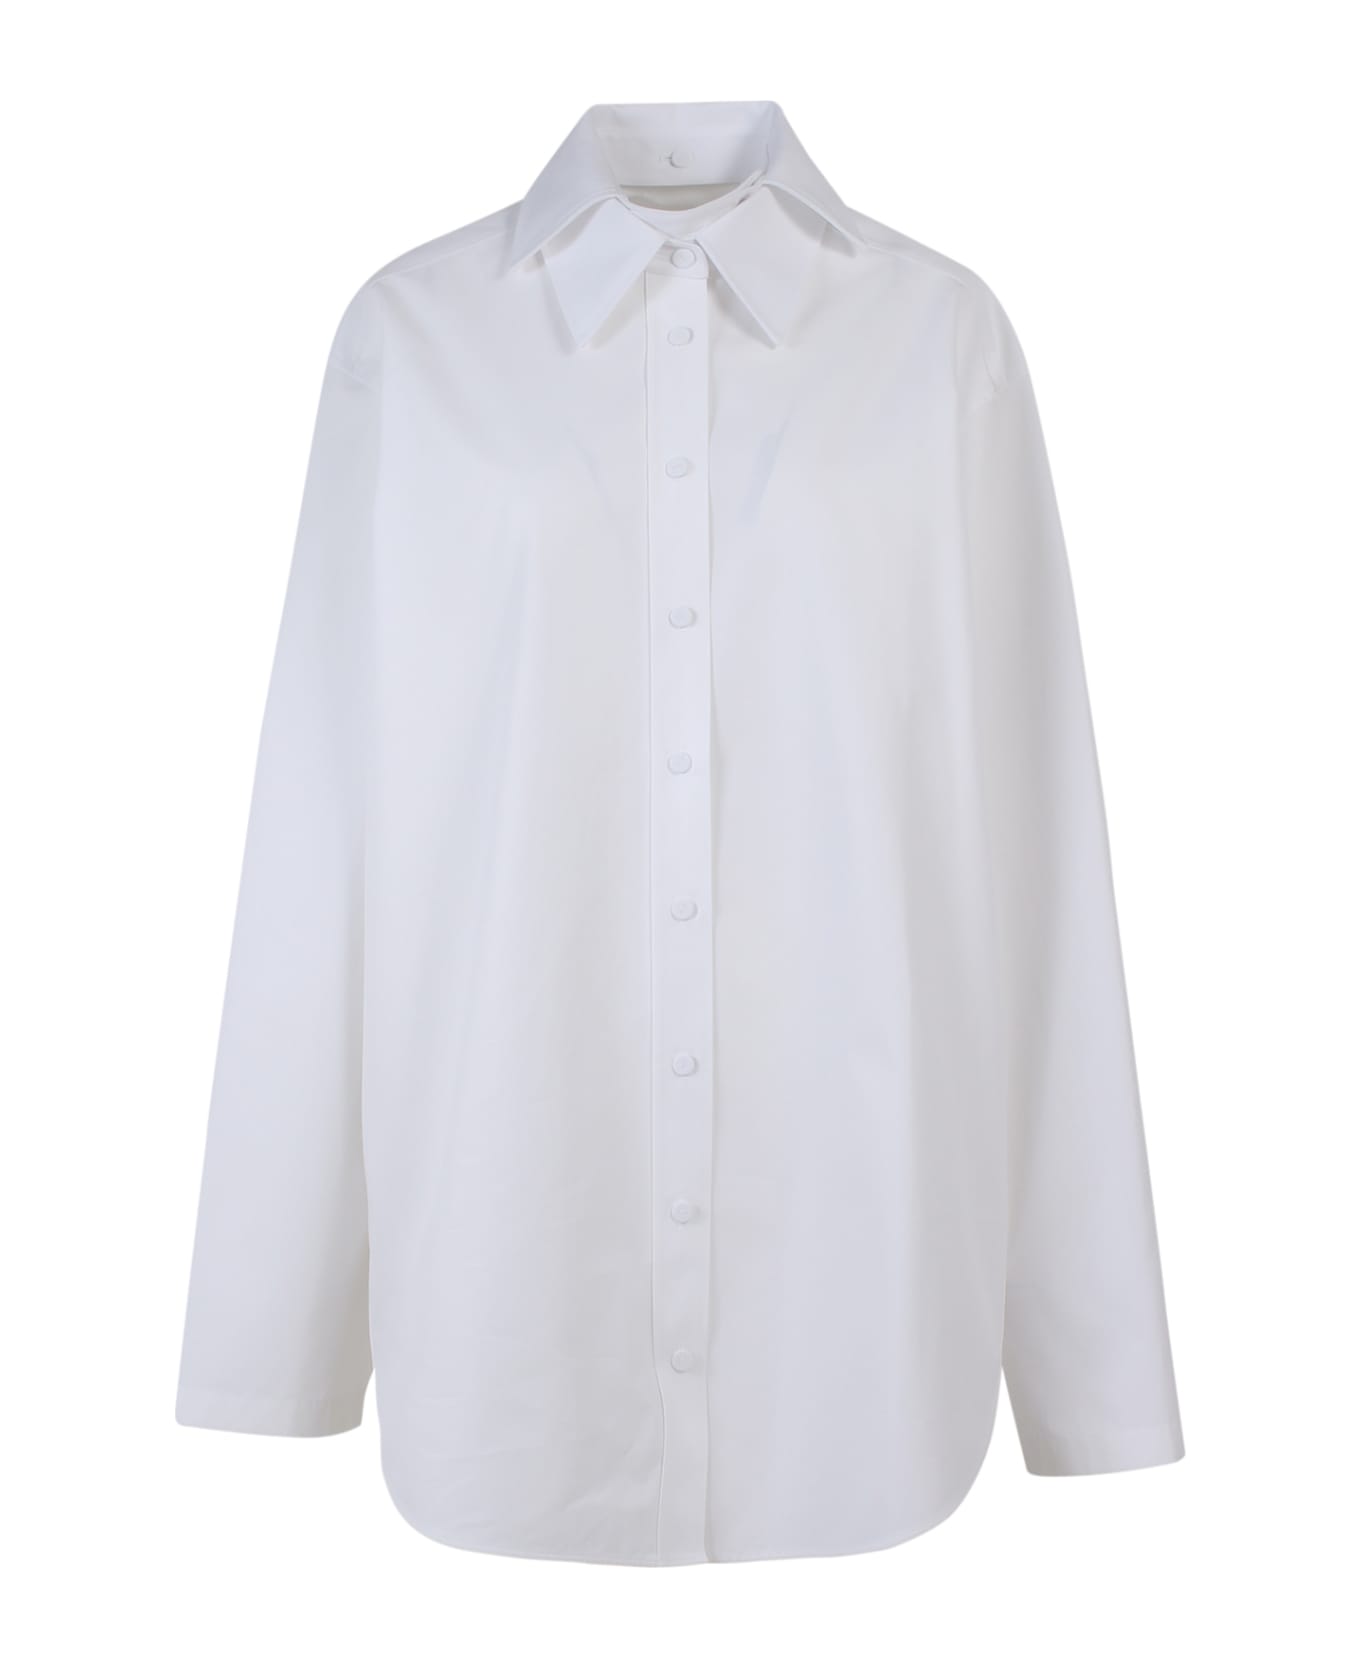 Krizia Shirt - White